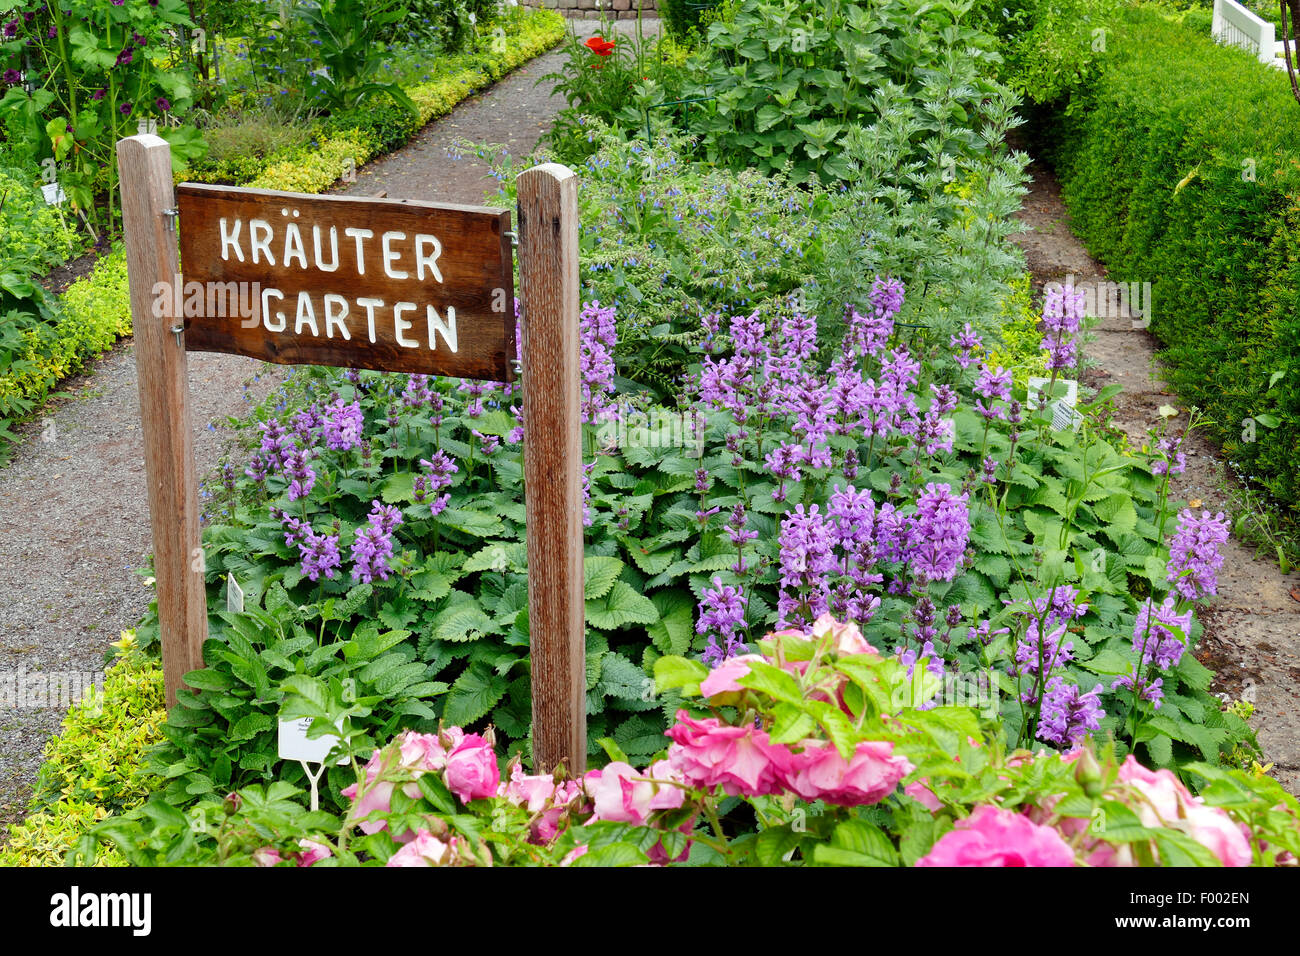 herb garden with sign Kraeutergarten, Germany Stock Photo